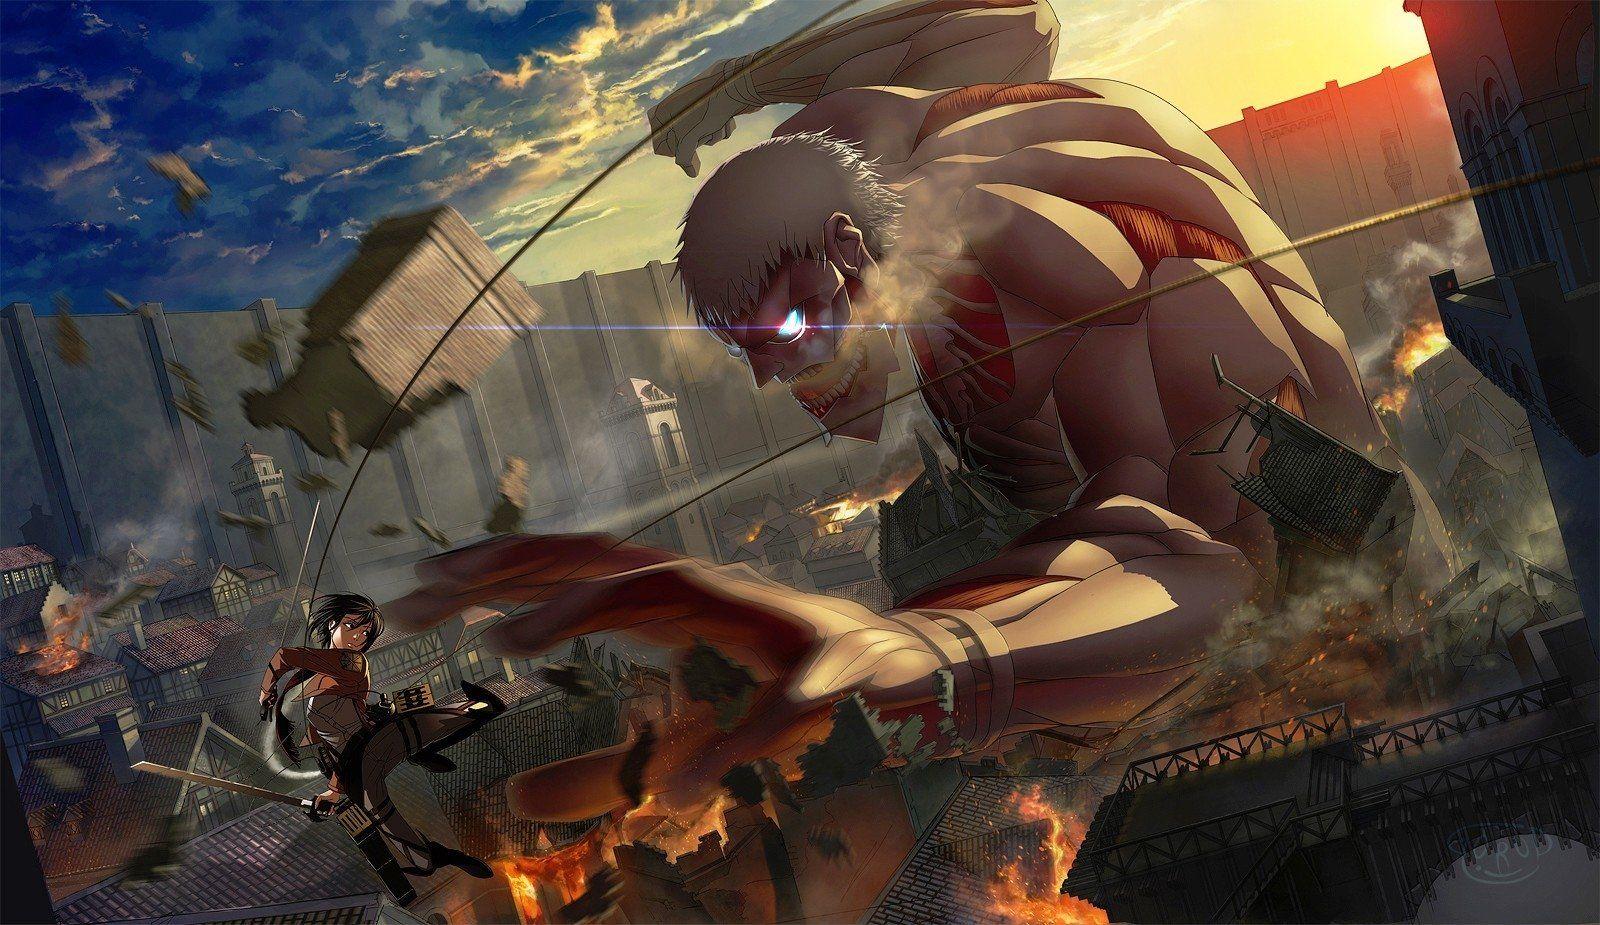 Attack On Titan Anime Wallpaper .wallpaperaccess.com